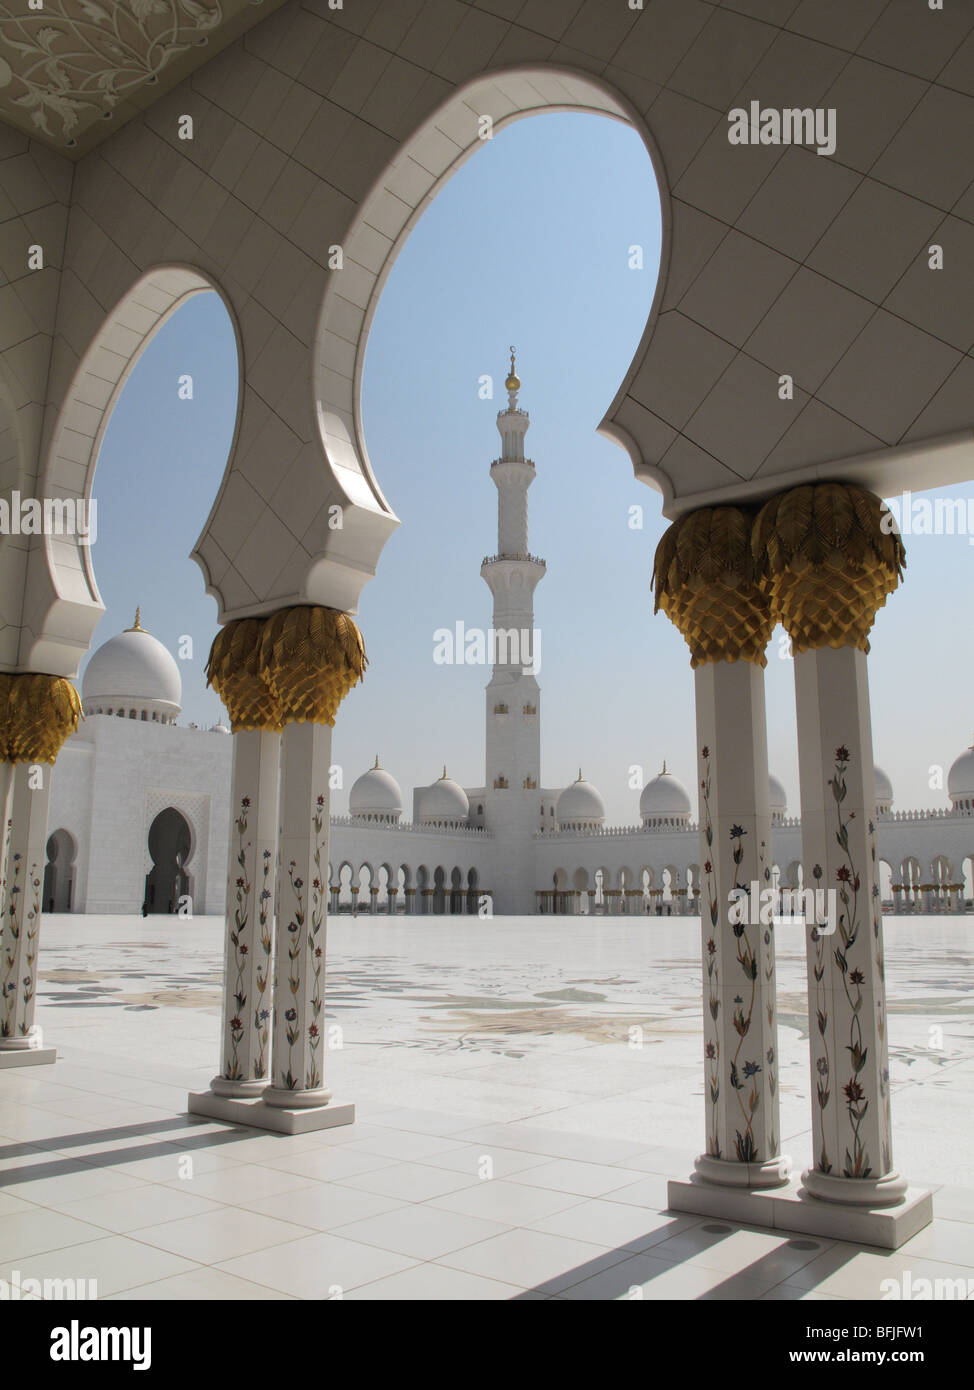 Minarett, columns and walkway arches at Sheikh Zayed Bin Sultan Al Nahyan Mosque, Abu Dhabi Stock Photo